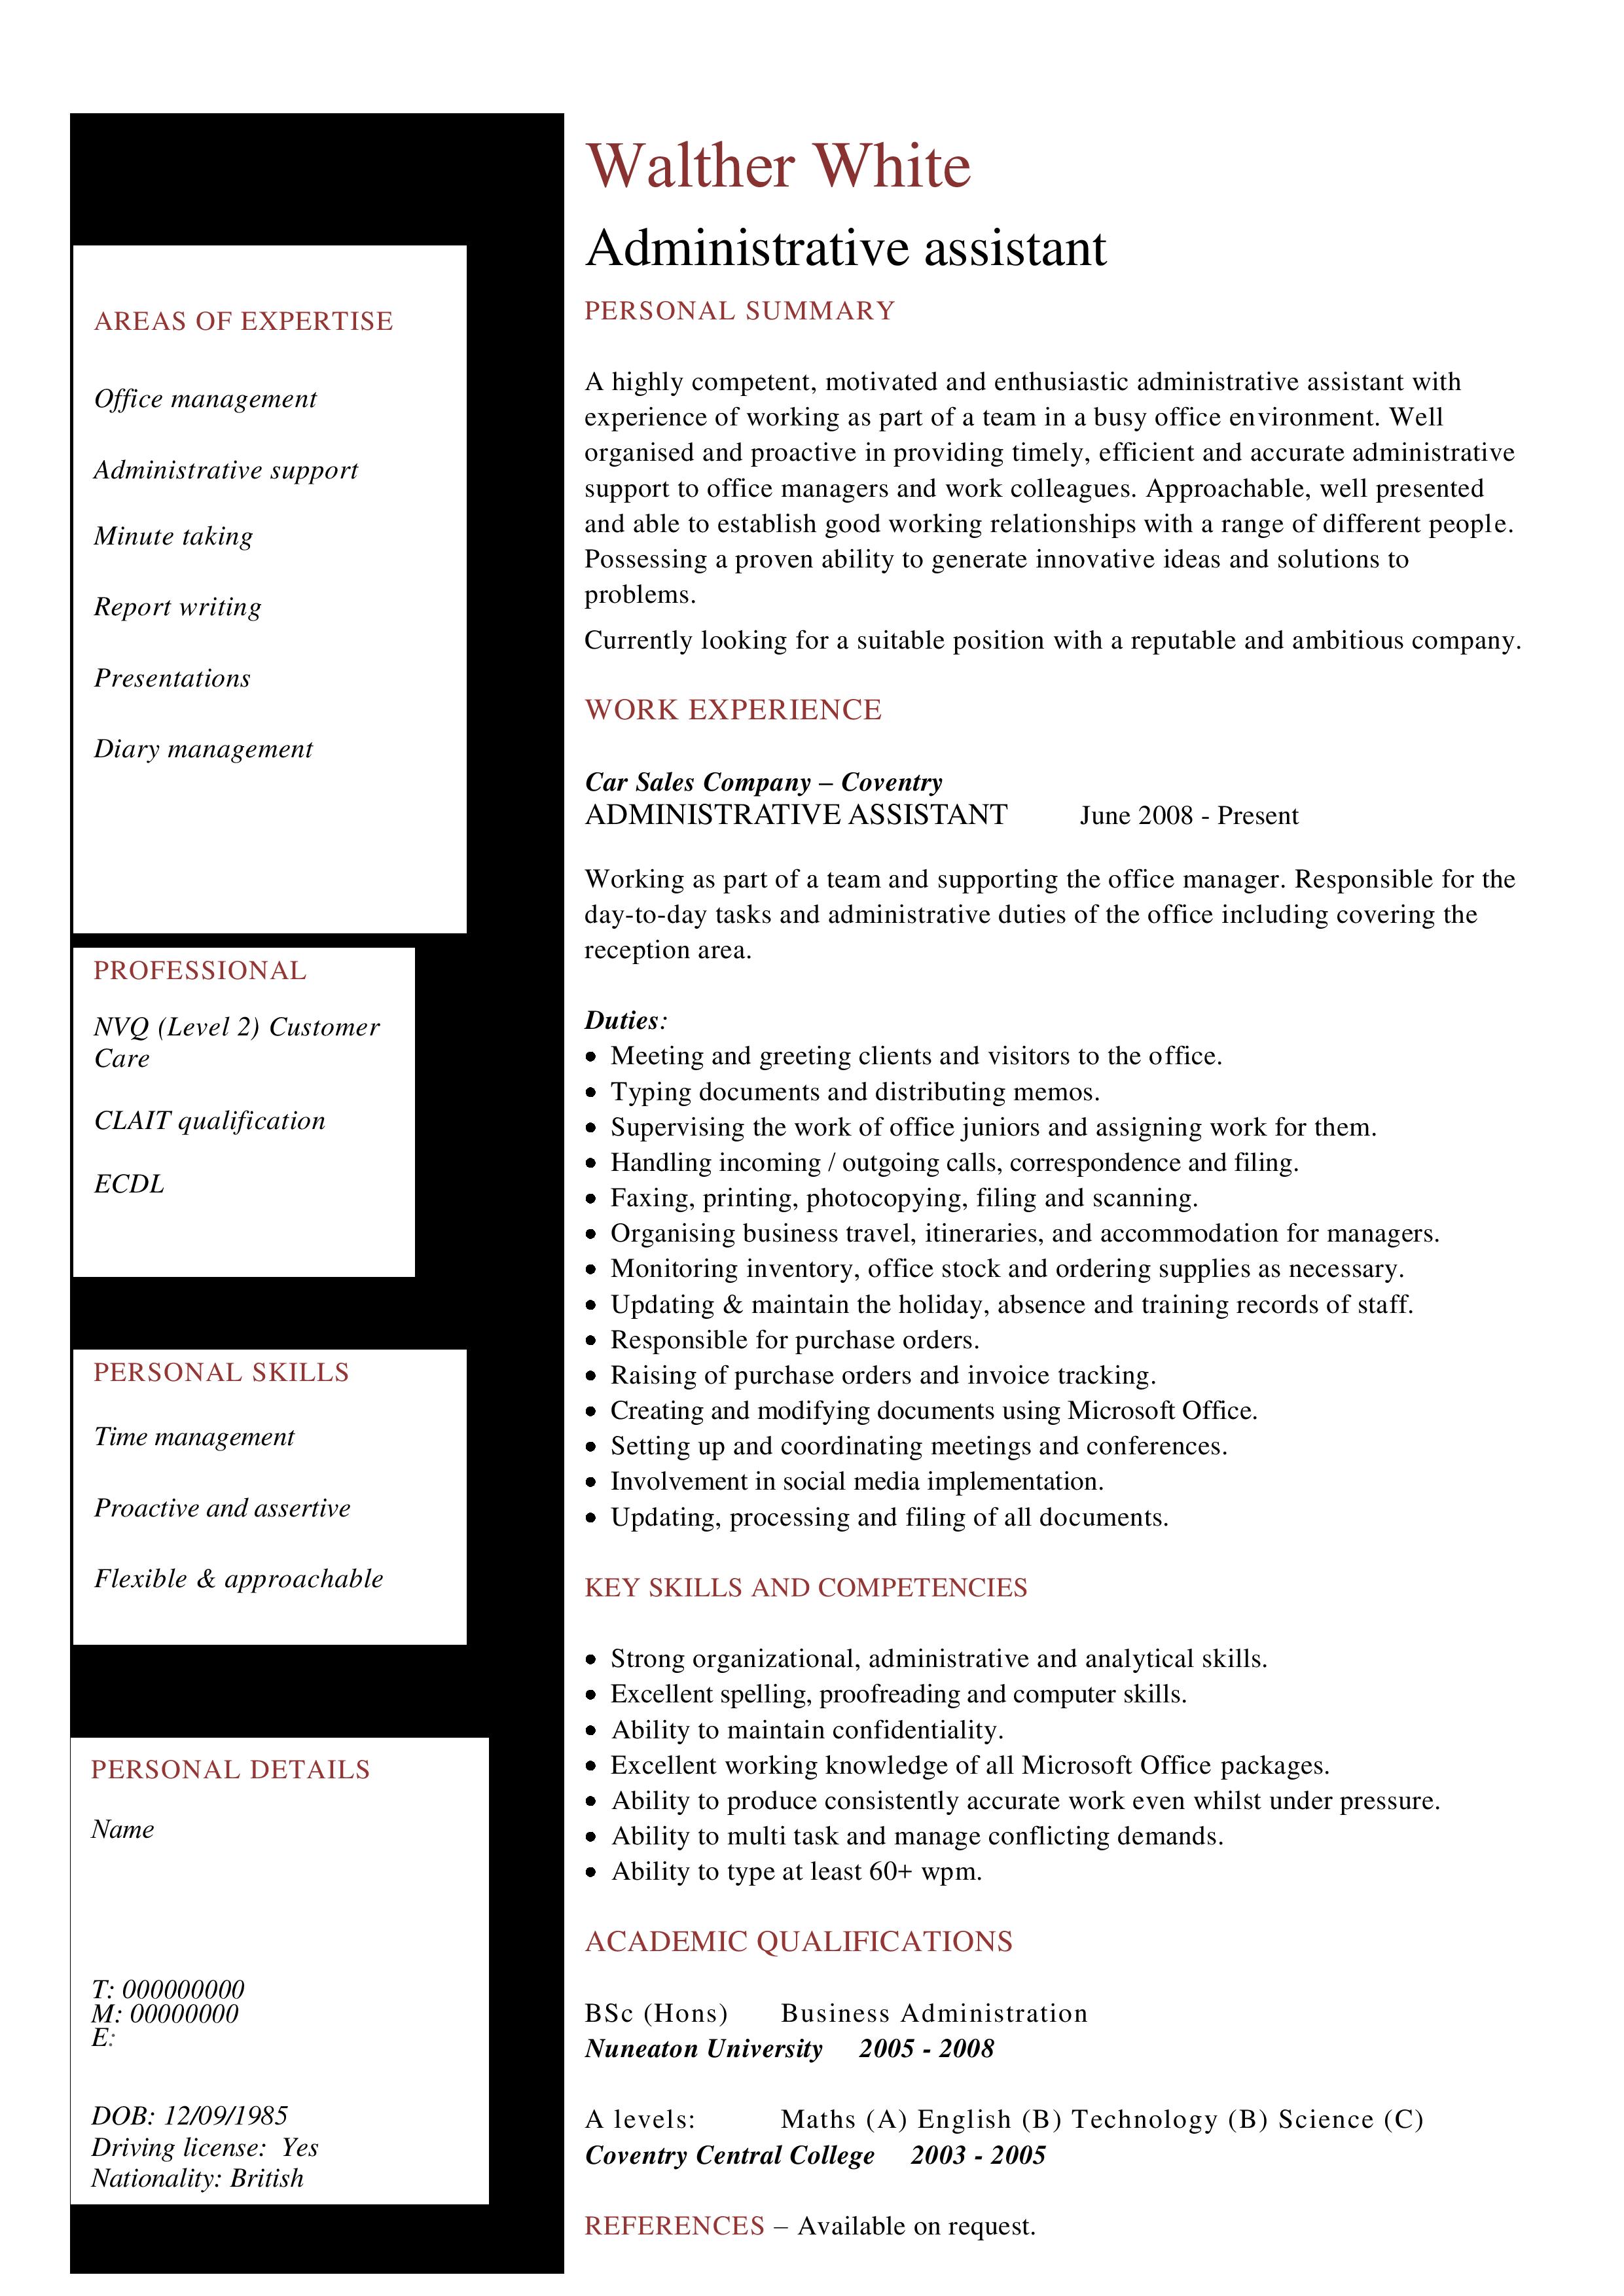 resume work experience description generator